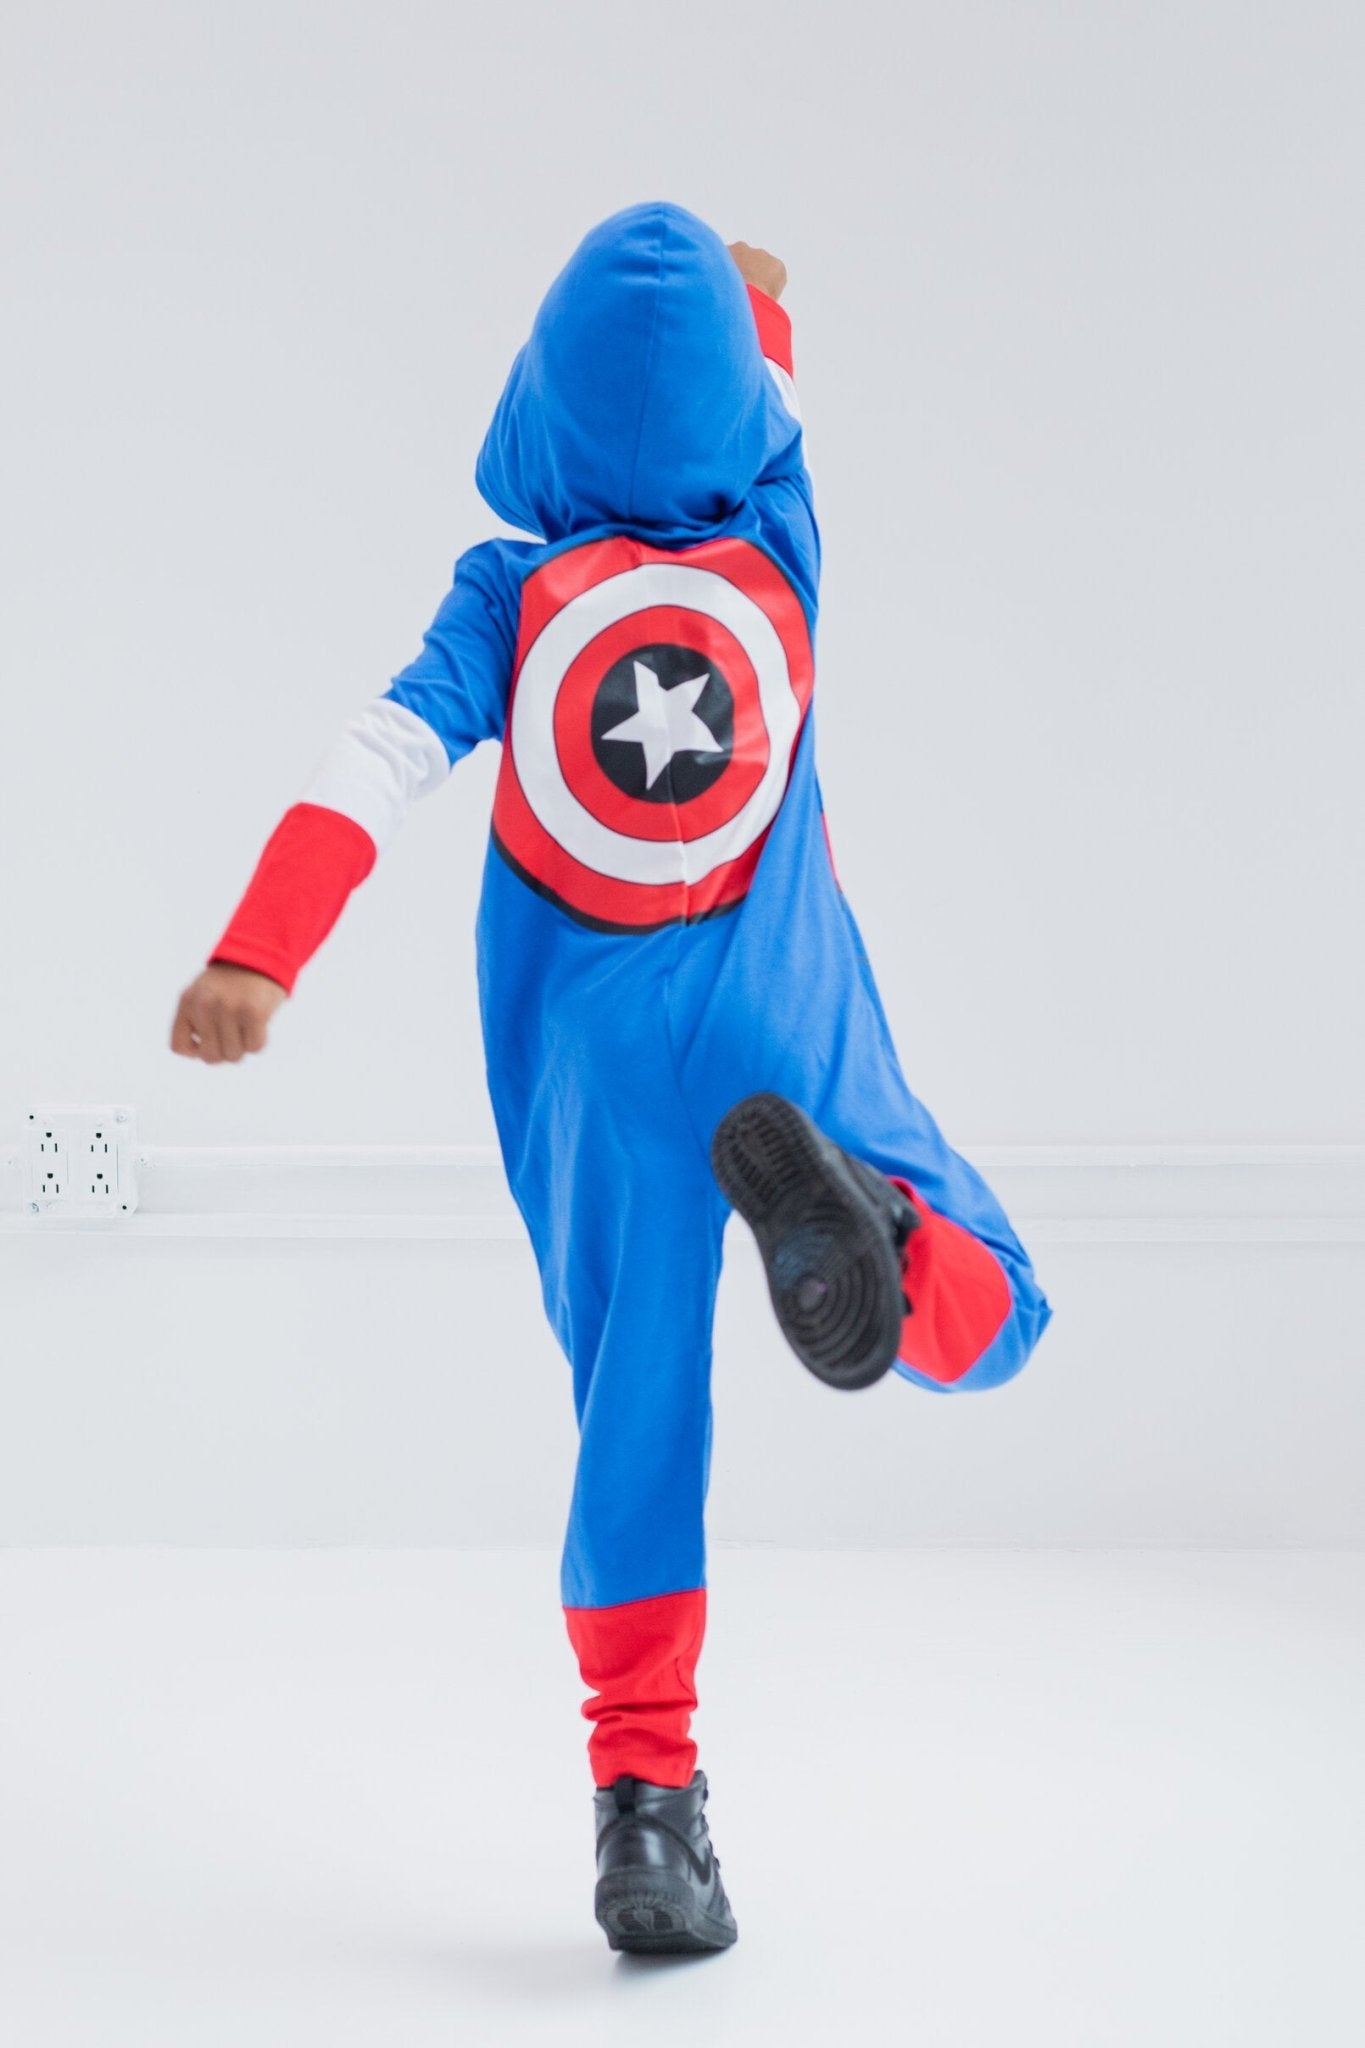 Marvel Avengers Captain America Zip Up Cosplay Coverall - imagikids